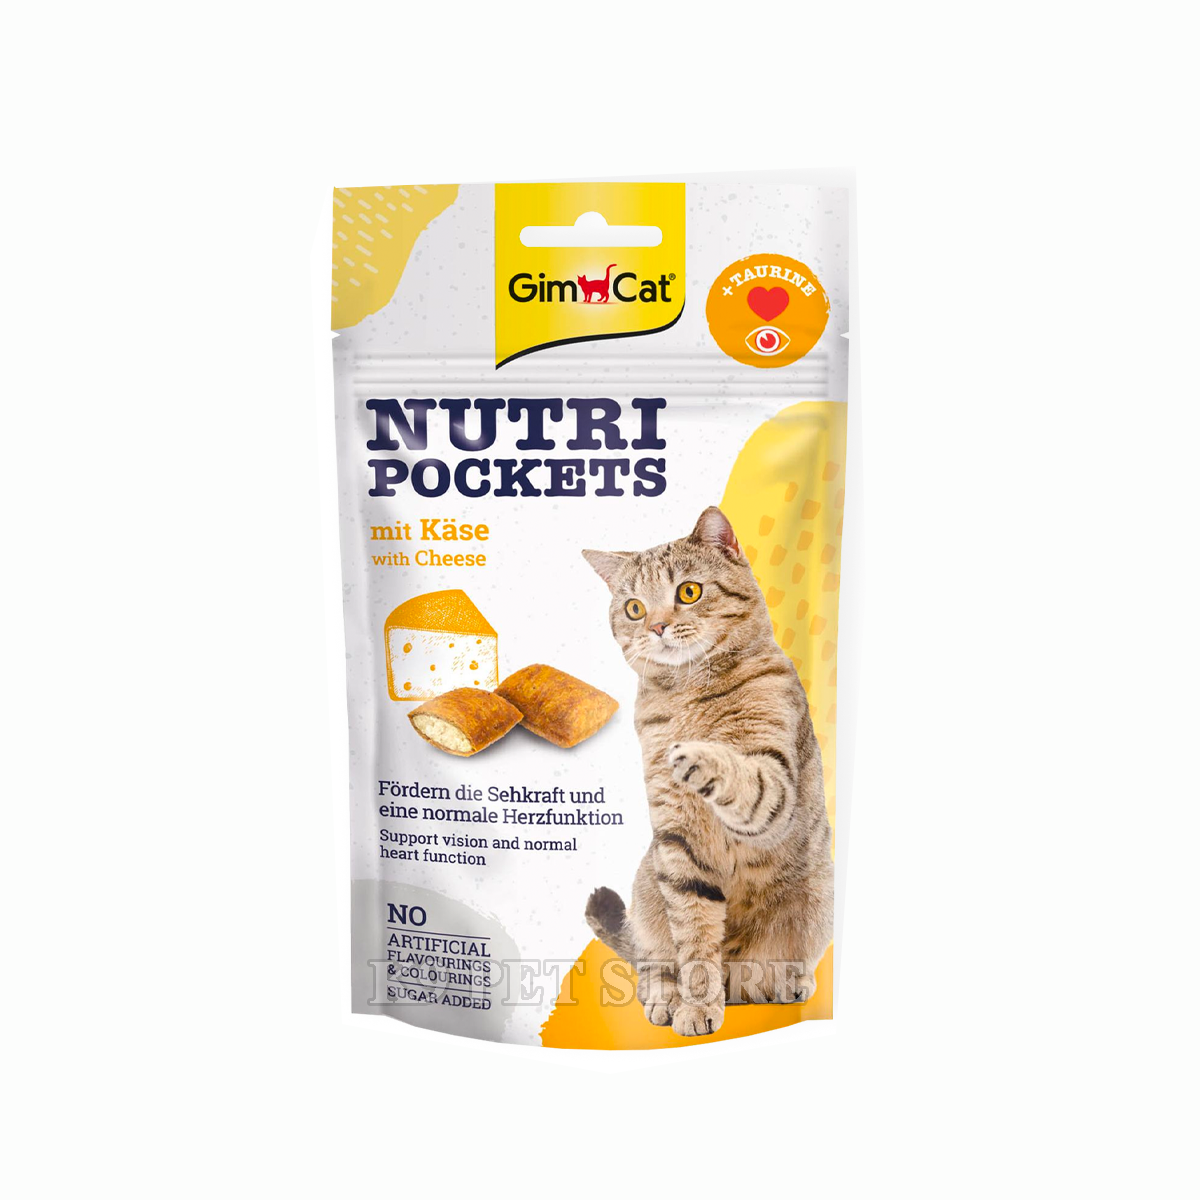 Snack mèo Gimcat Nutri Pockets with Cheese & Taurine 60g - bổ sung Taurine (vị phô mai)